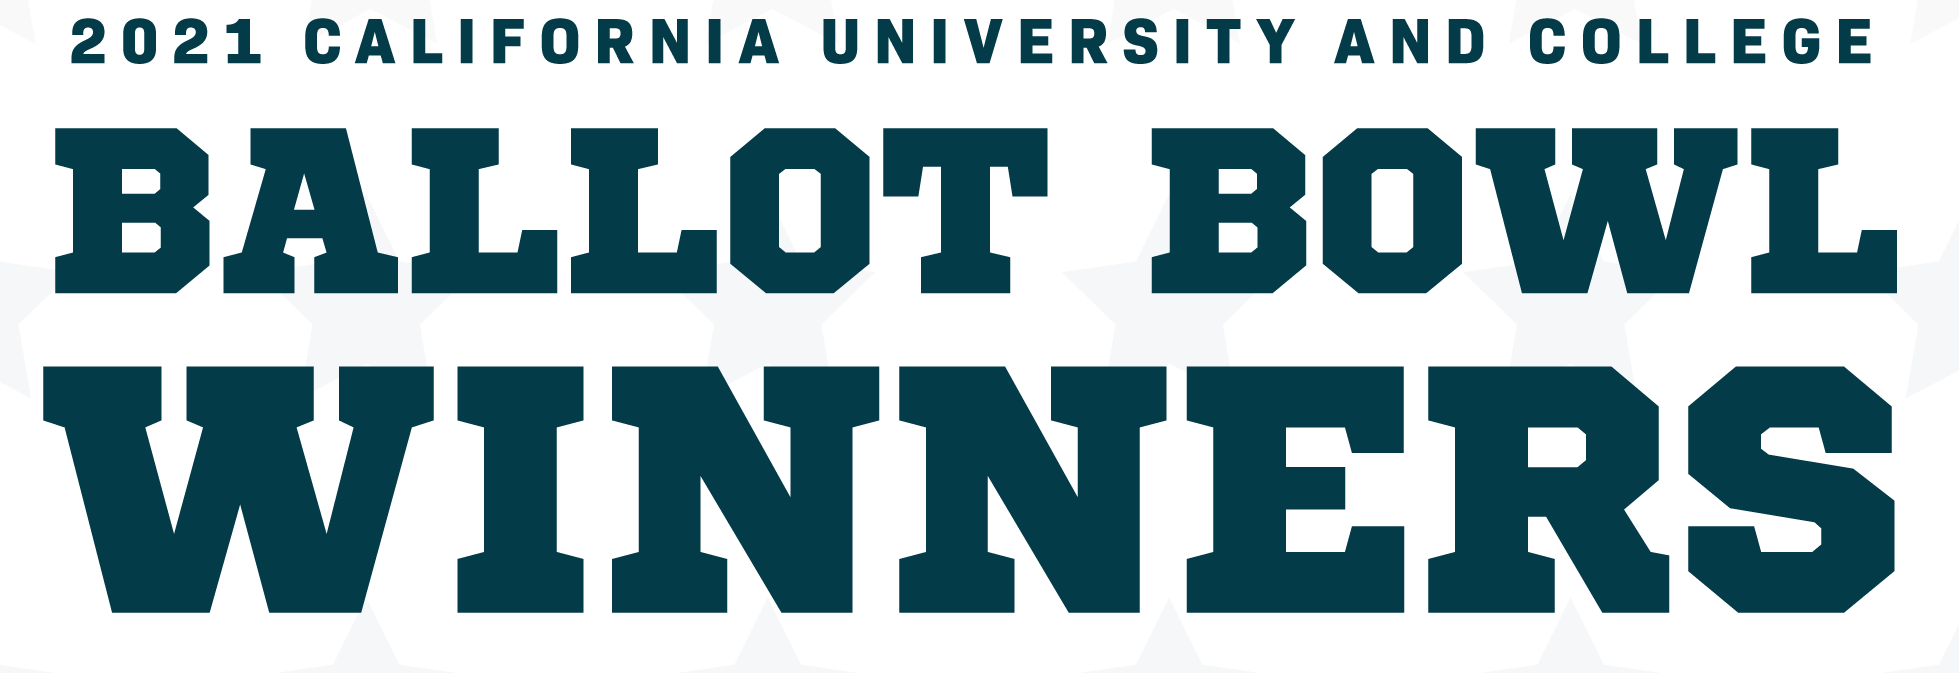 2021 California university and college ballot bowl winners